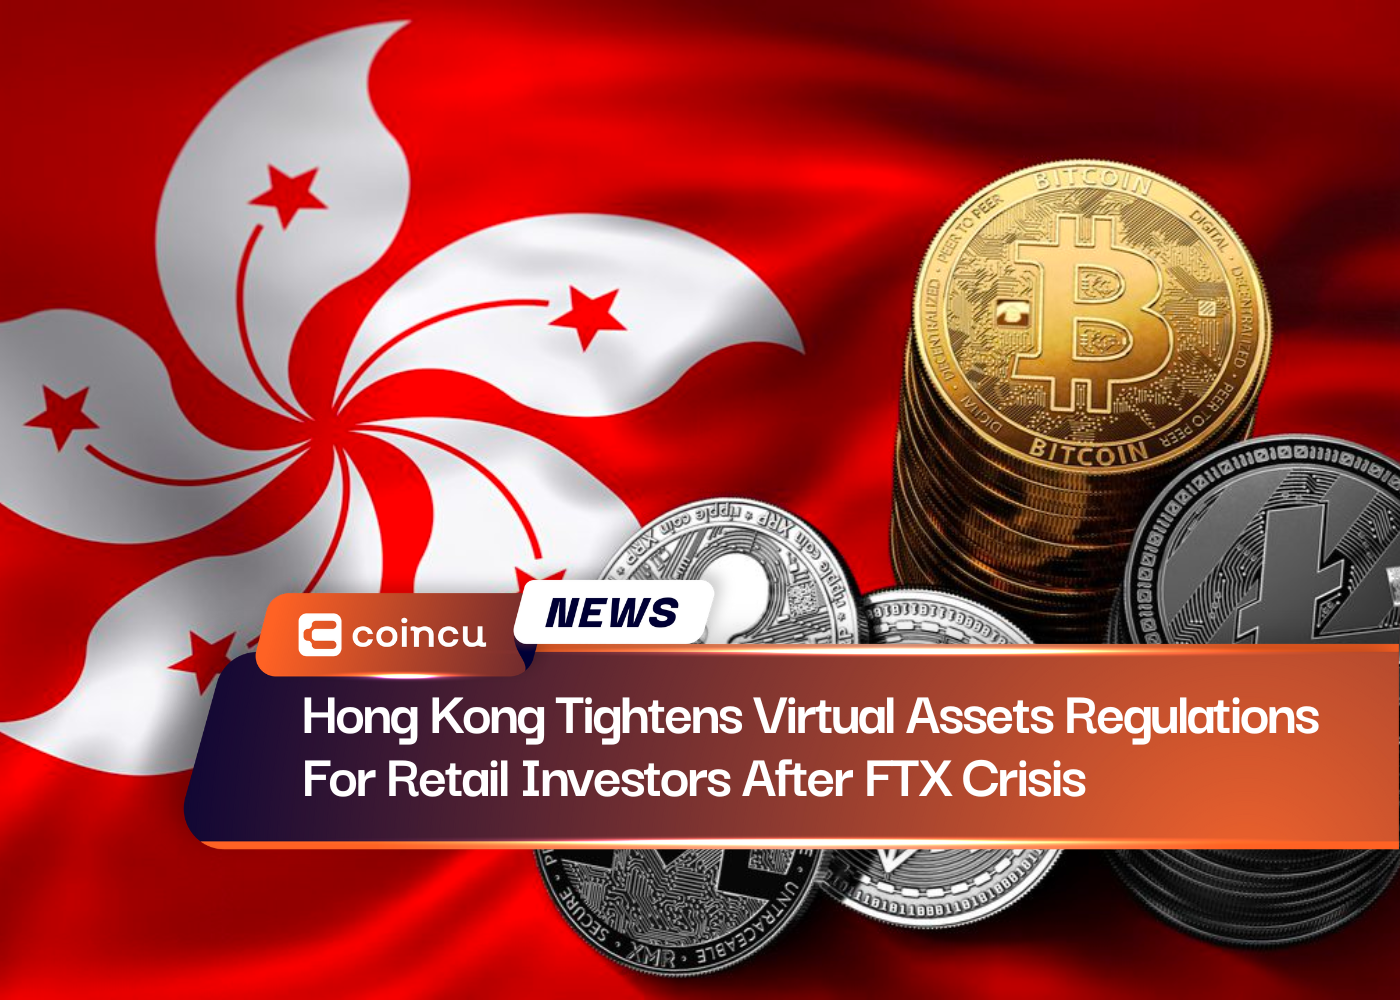 Hong Kong Tightens Virtual Assets Regulations For Retail Investors After FTX Crisis